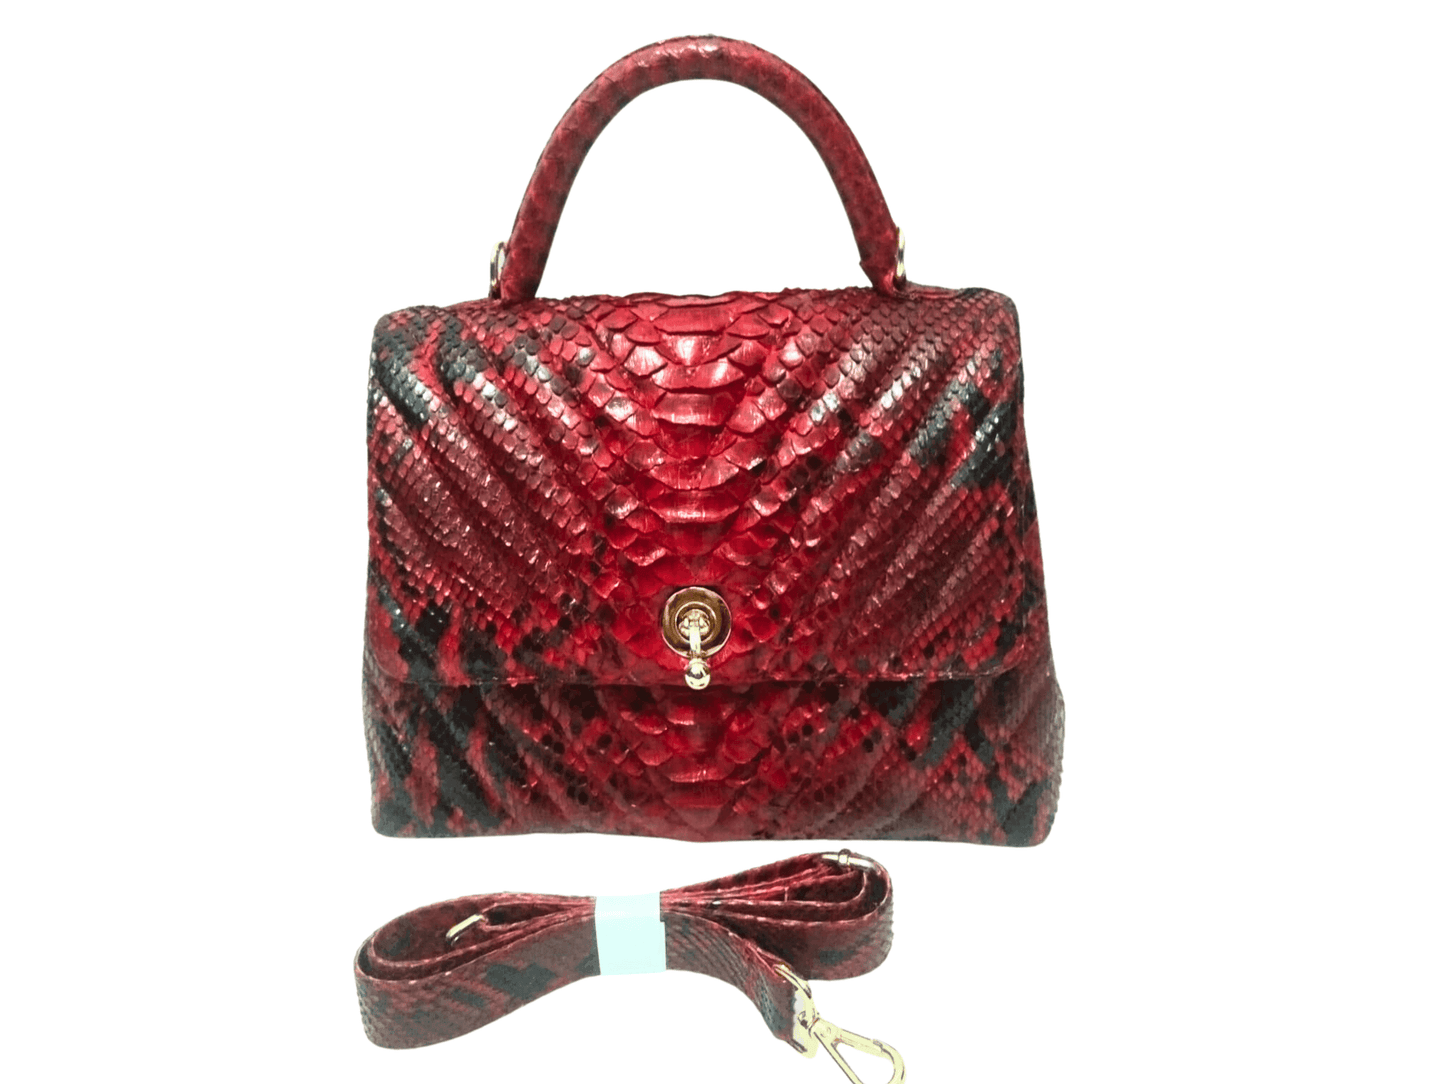 Triangle Quilt Snakeskin Handbag Red Python Jacket by LFM Fashion